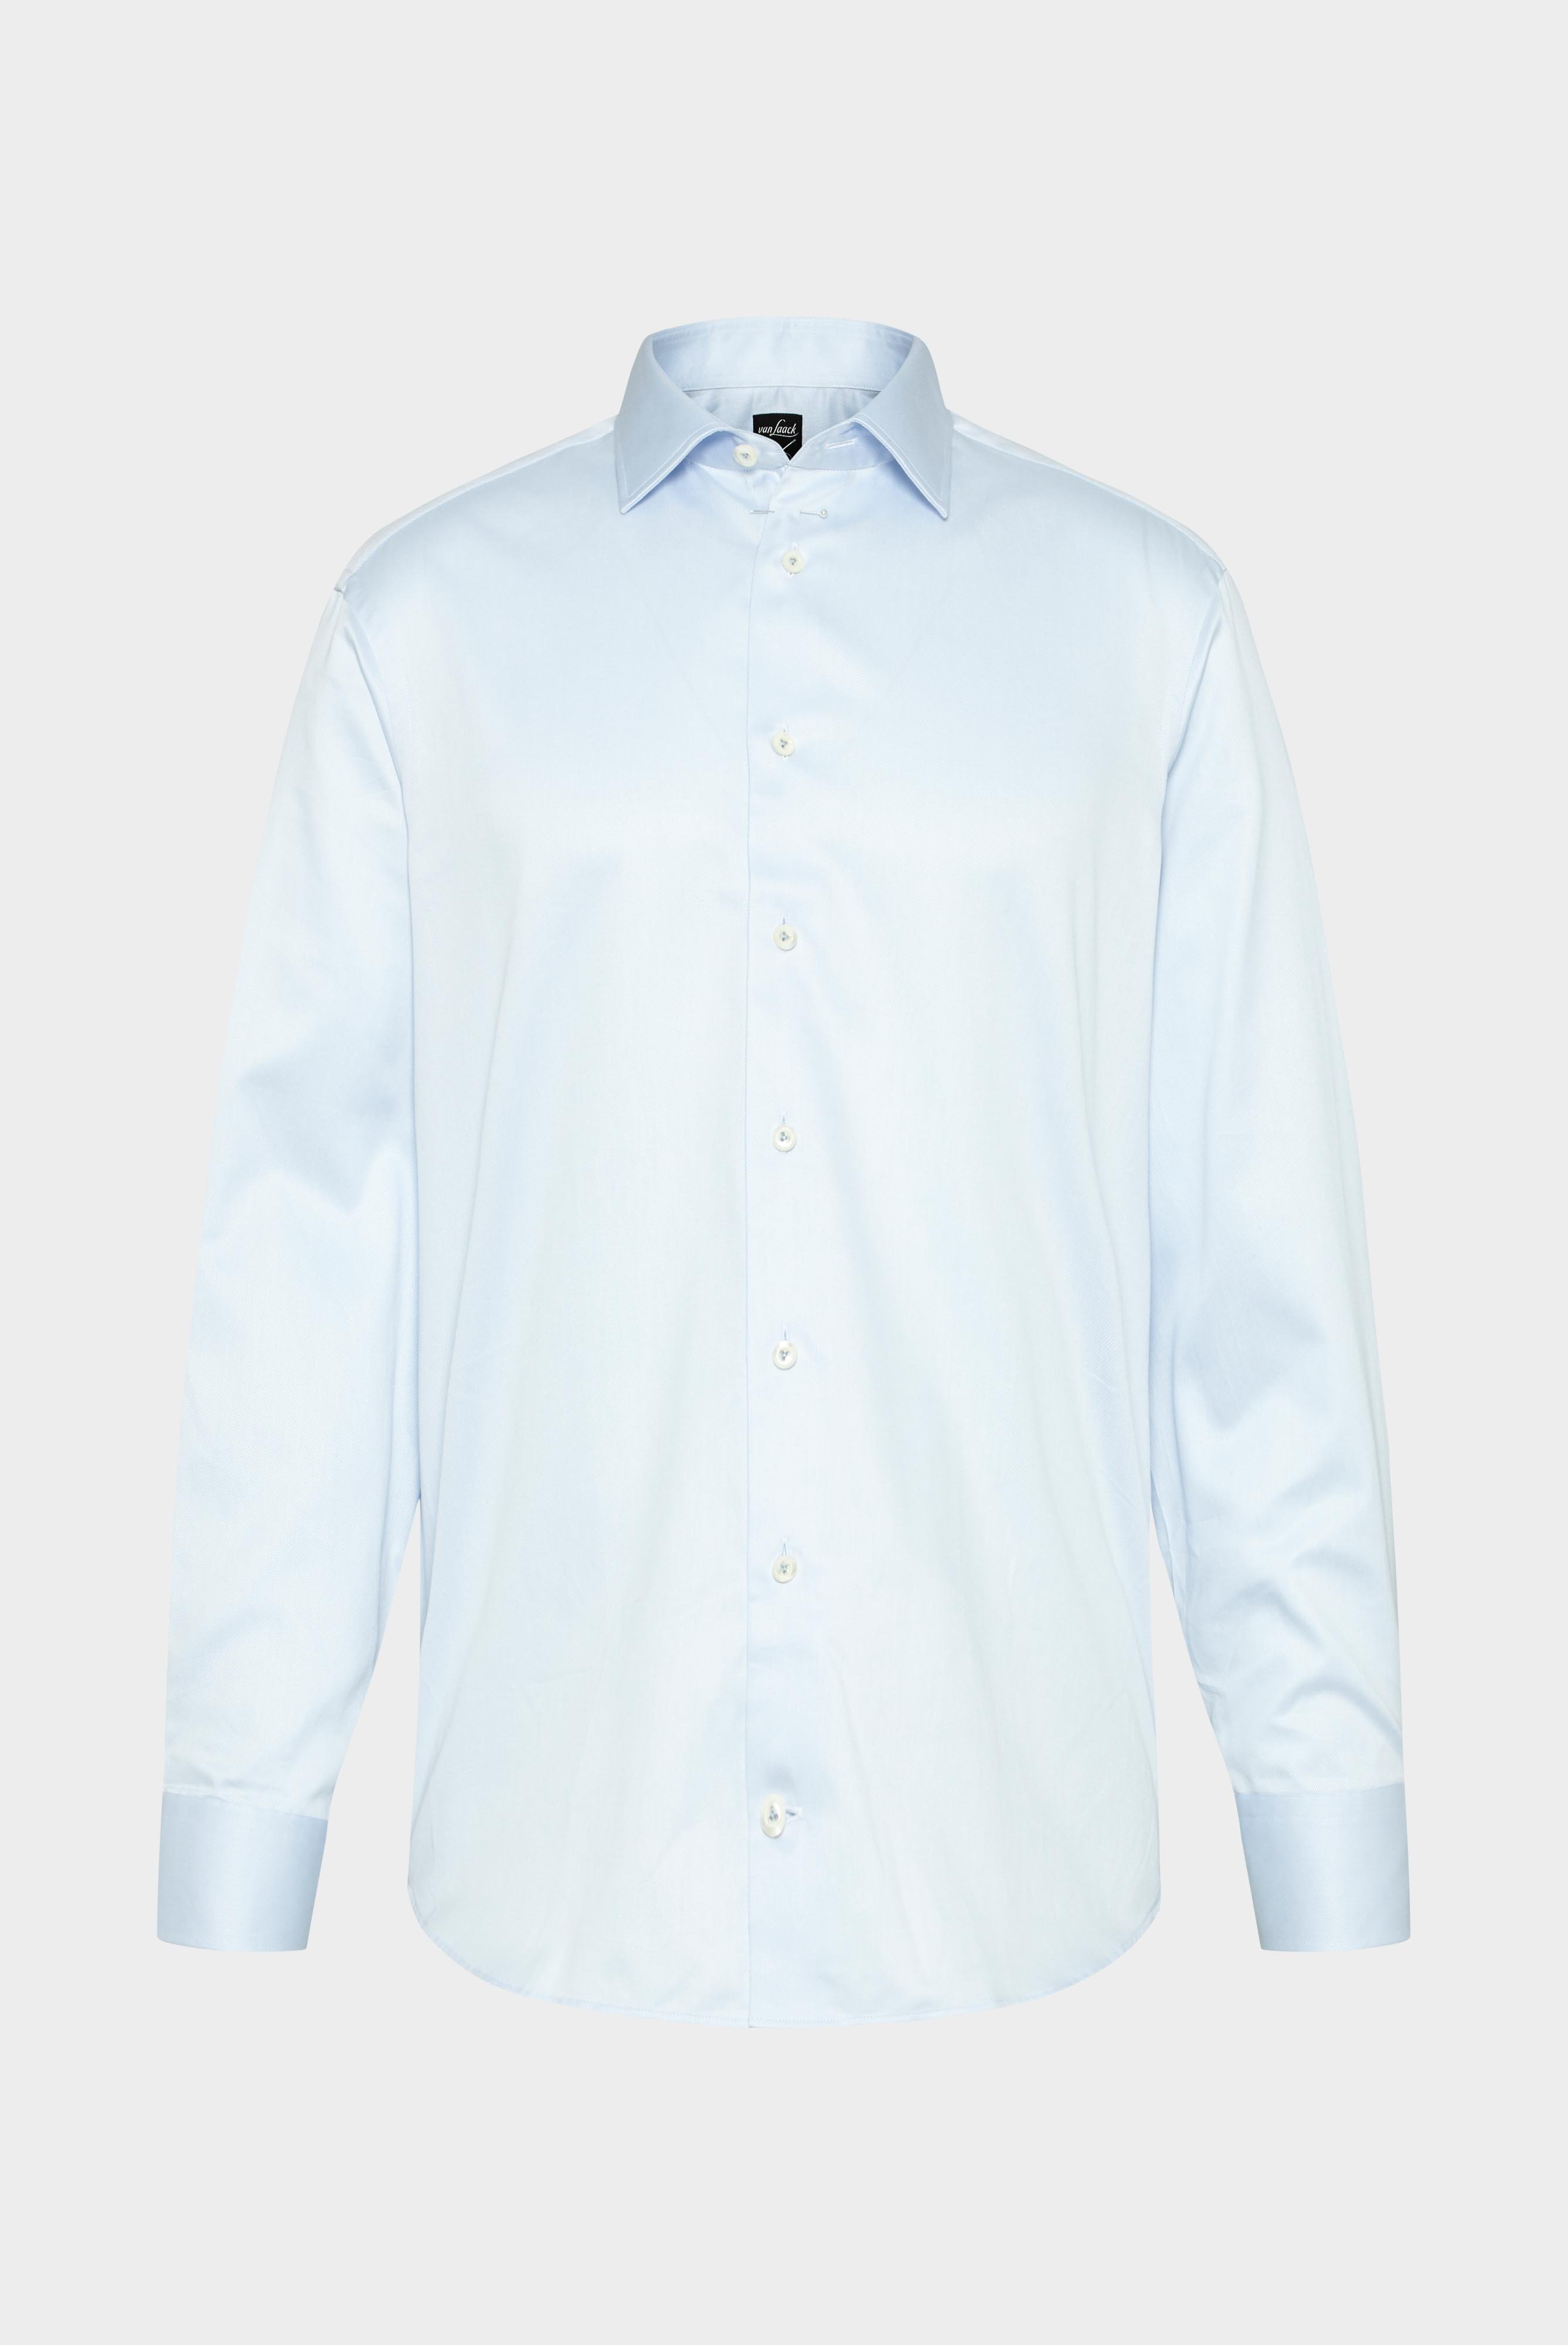 Business Shirts+Cotton Twill Shirt+20.2011.AV.130148.710.37